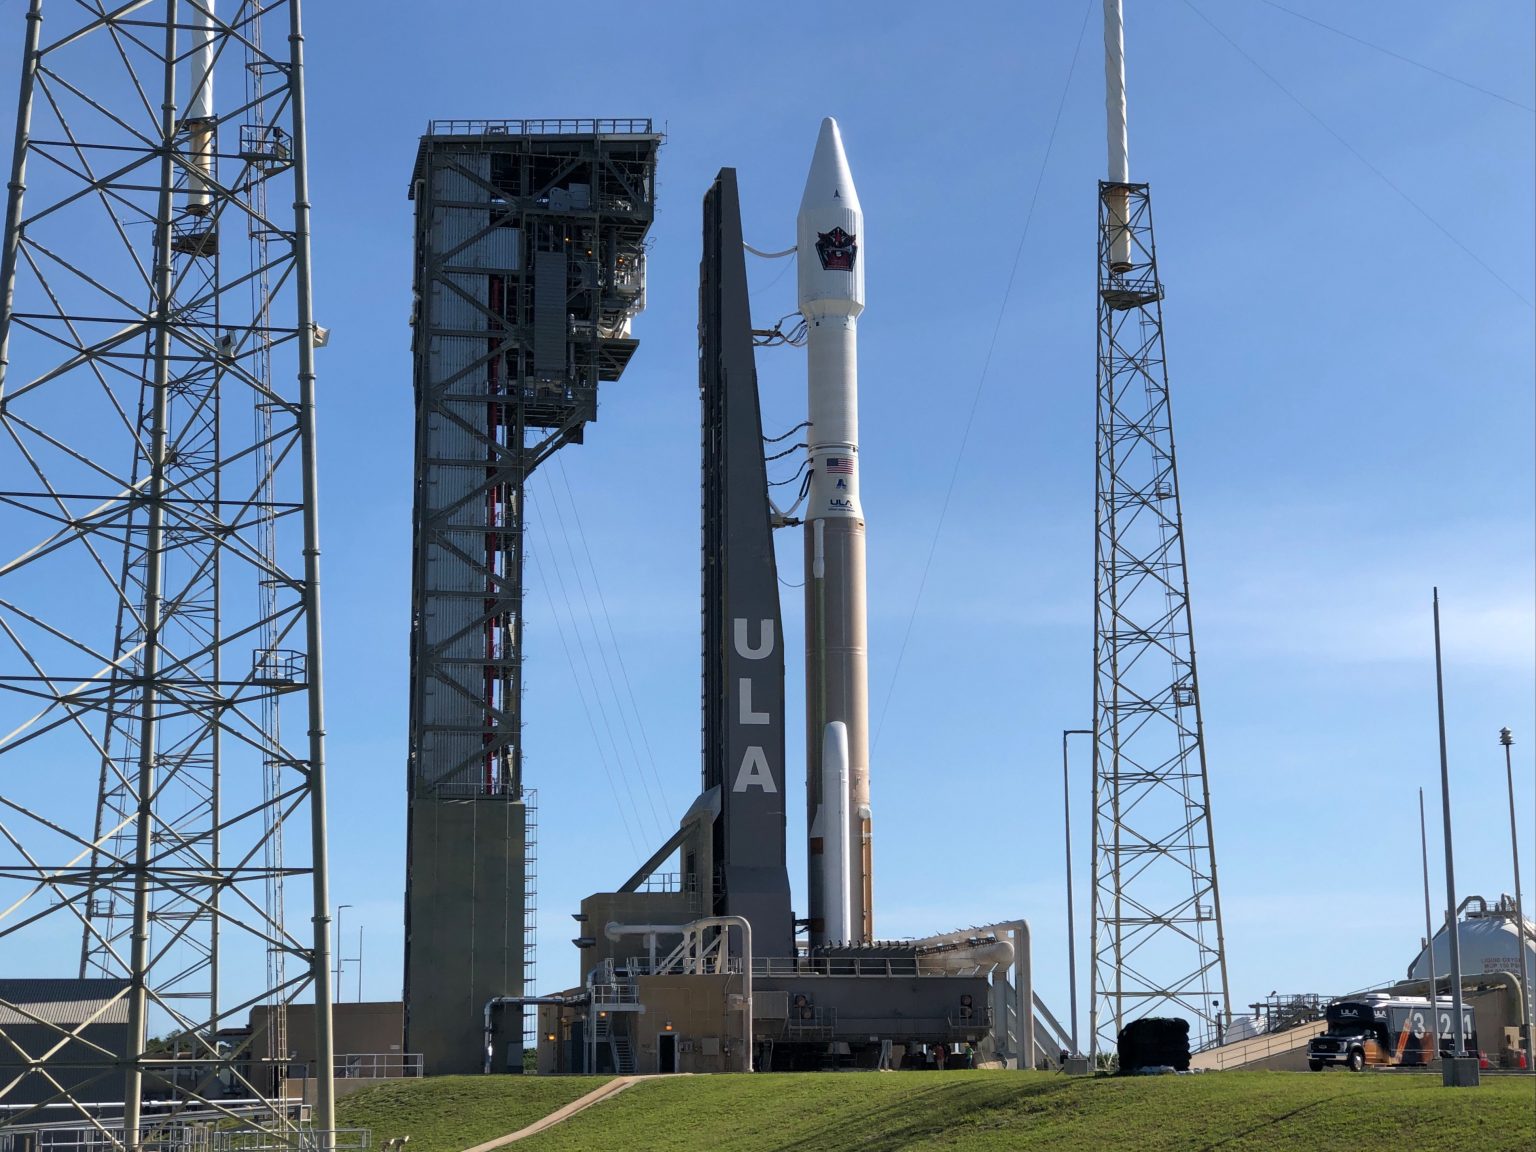 Atlas V rocket launches SBIRS Geo-5 missile warning satellite for US Space Force | యు.ఎస్ స్పేస్ ఫోర్స్ కోసం ఎస్.బి.ఐ.ఆర్.ఎస్ జియో-5 క్షిపణి హెచ్చరిక ఉపగ్రహాన్ని ప్రయోగించిన అట్లాస్ వి రాకెట్ |_30.1